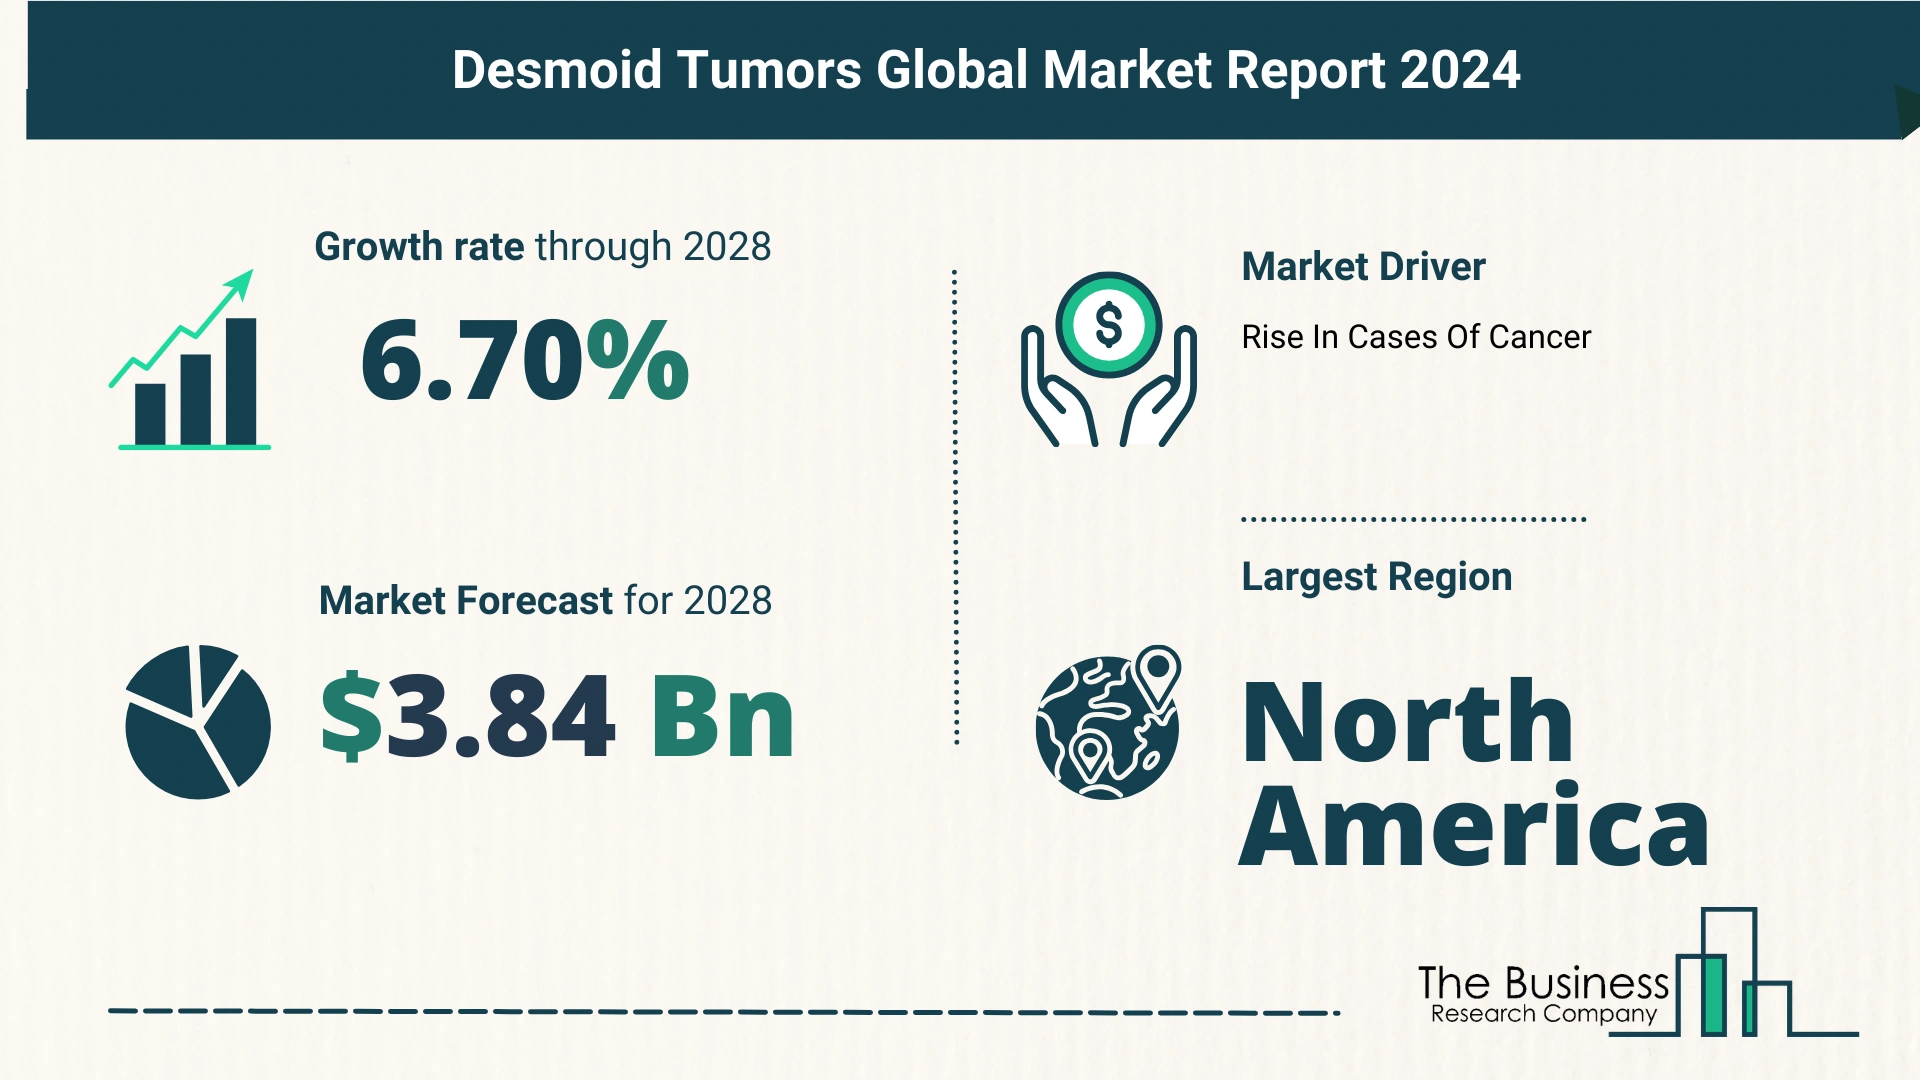 Global Desmoid Tumors Market Size